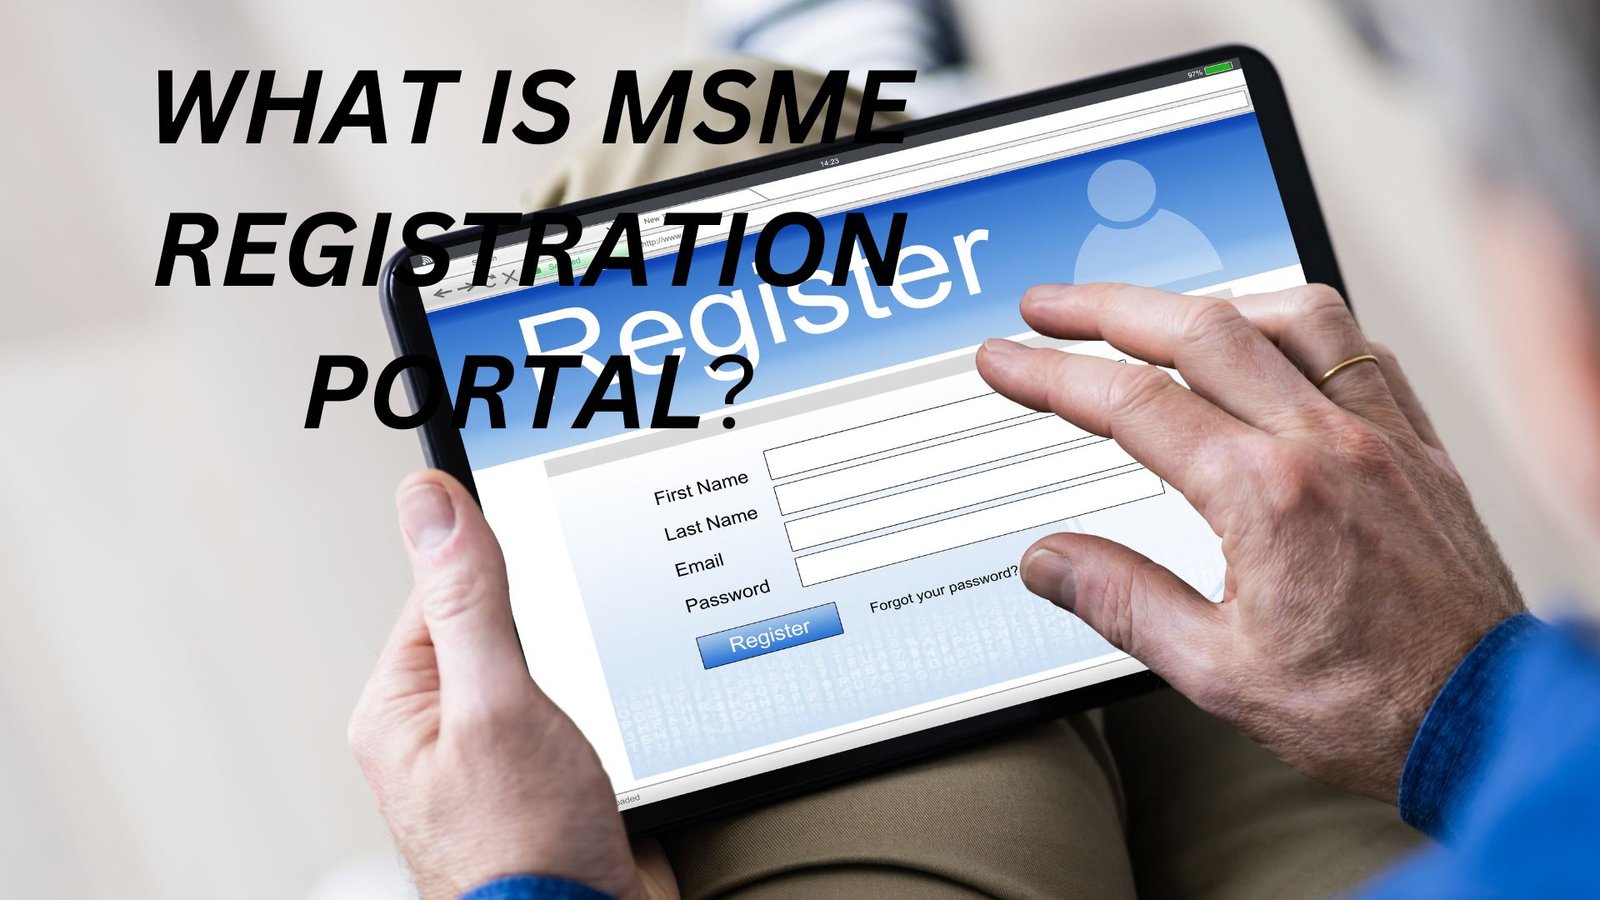 WHAT IS MSME REGISTRATION PORTAL?